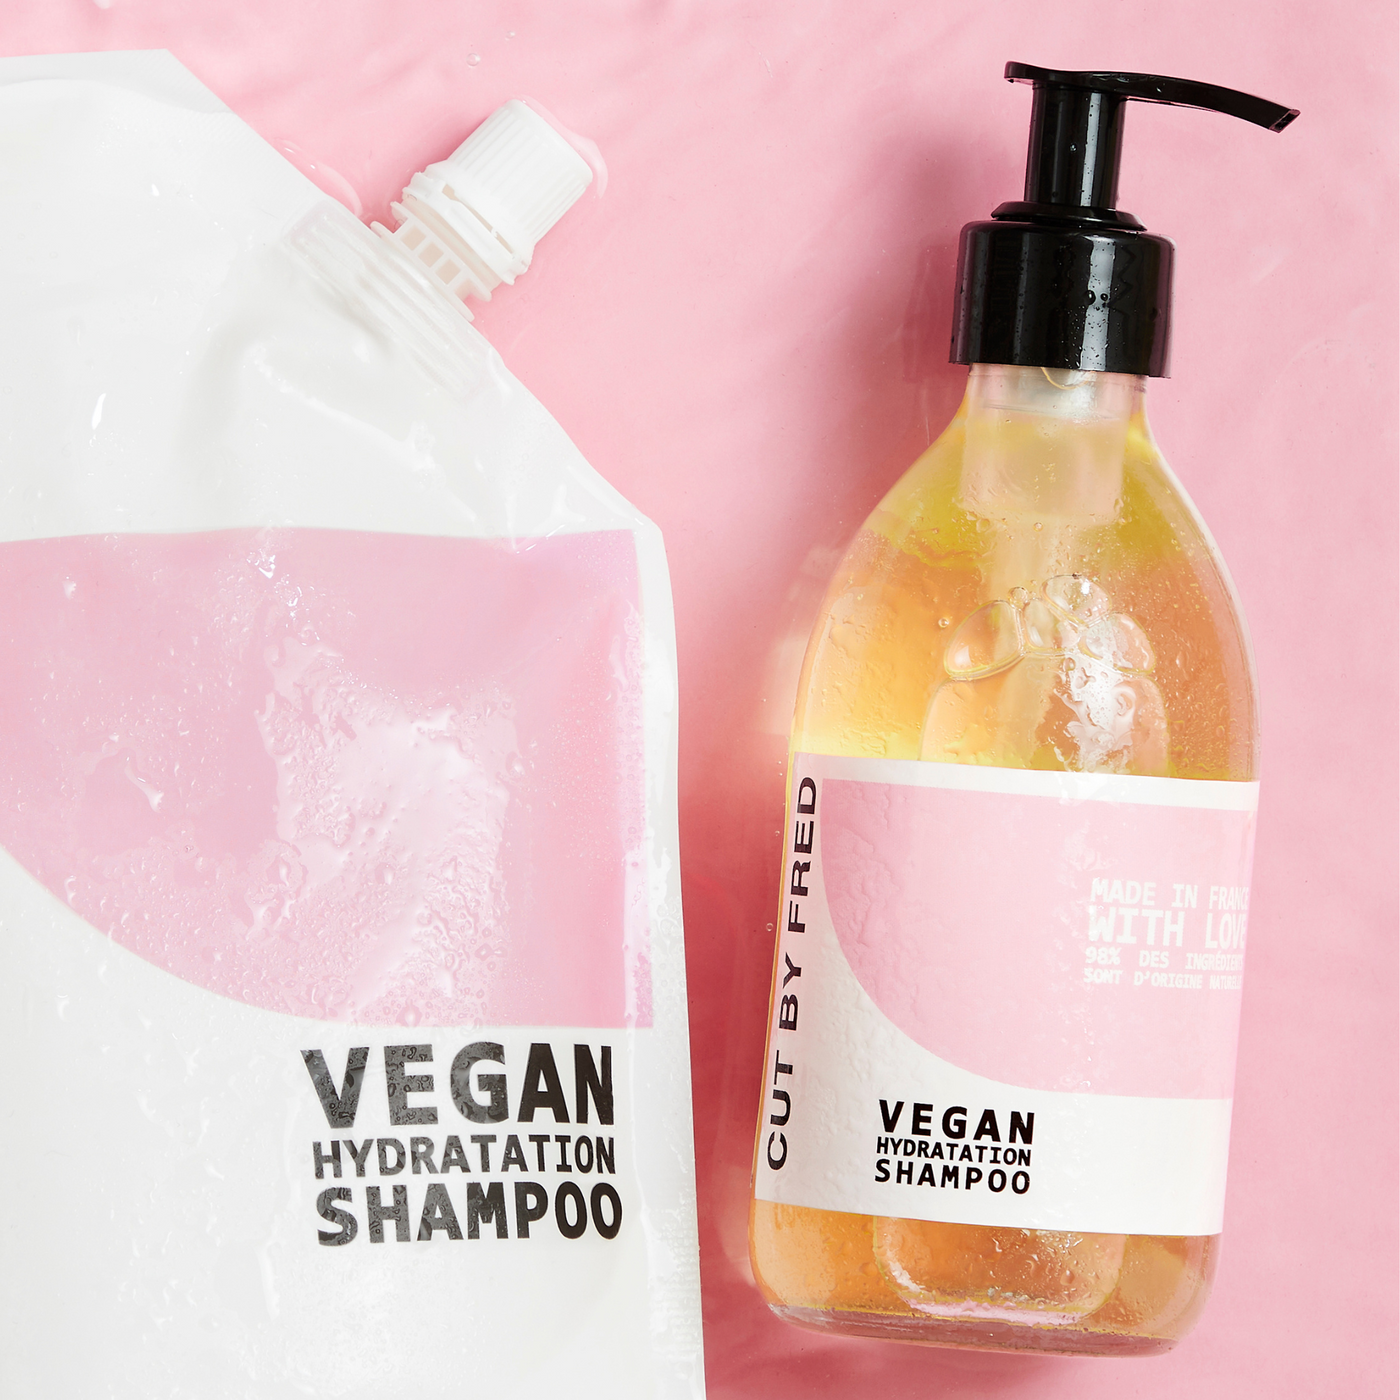 Vegan Hydratation Shampoo - new 290 ml size